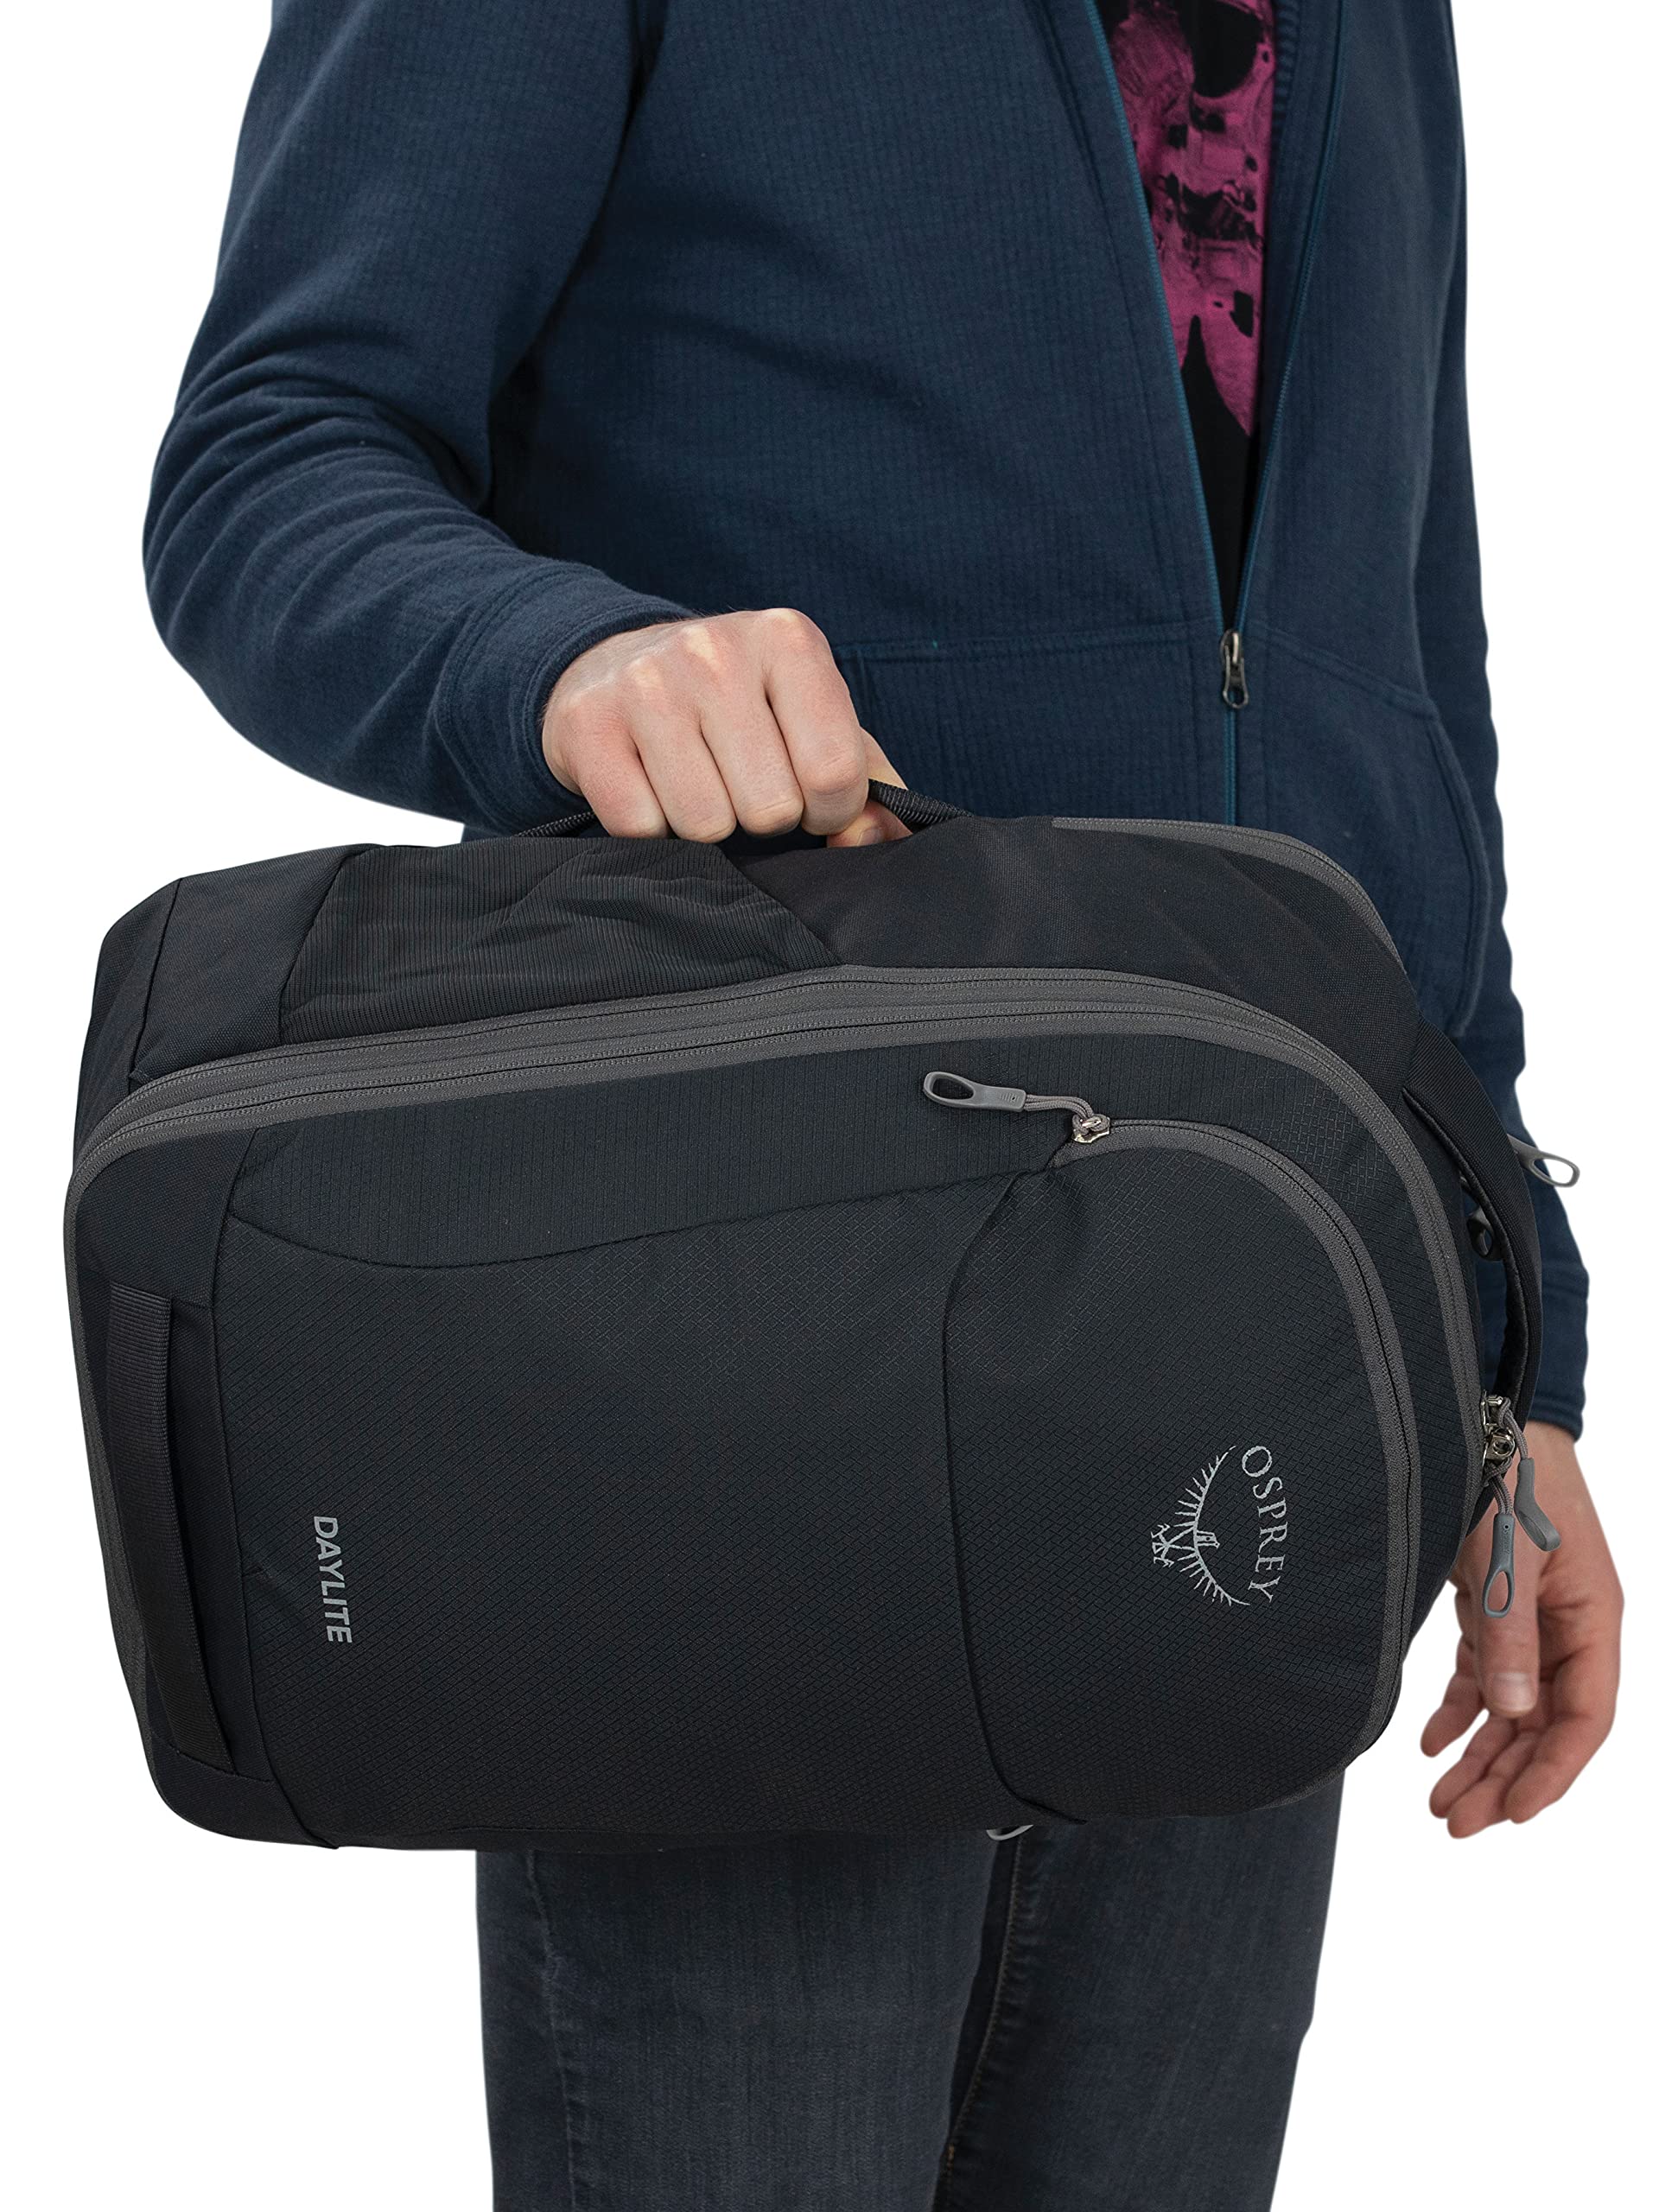 Osprey Daylite Expandable 26+6 Travel Backpack, Black, O/S